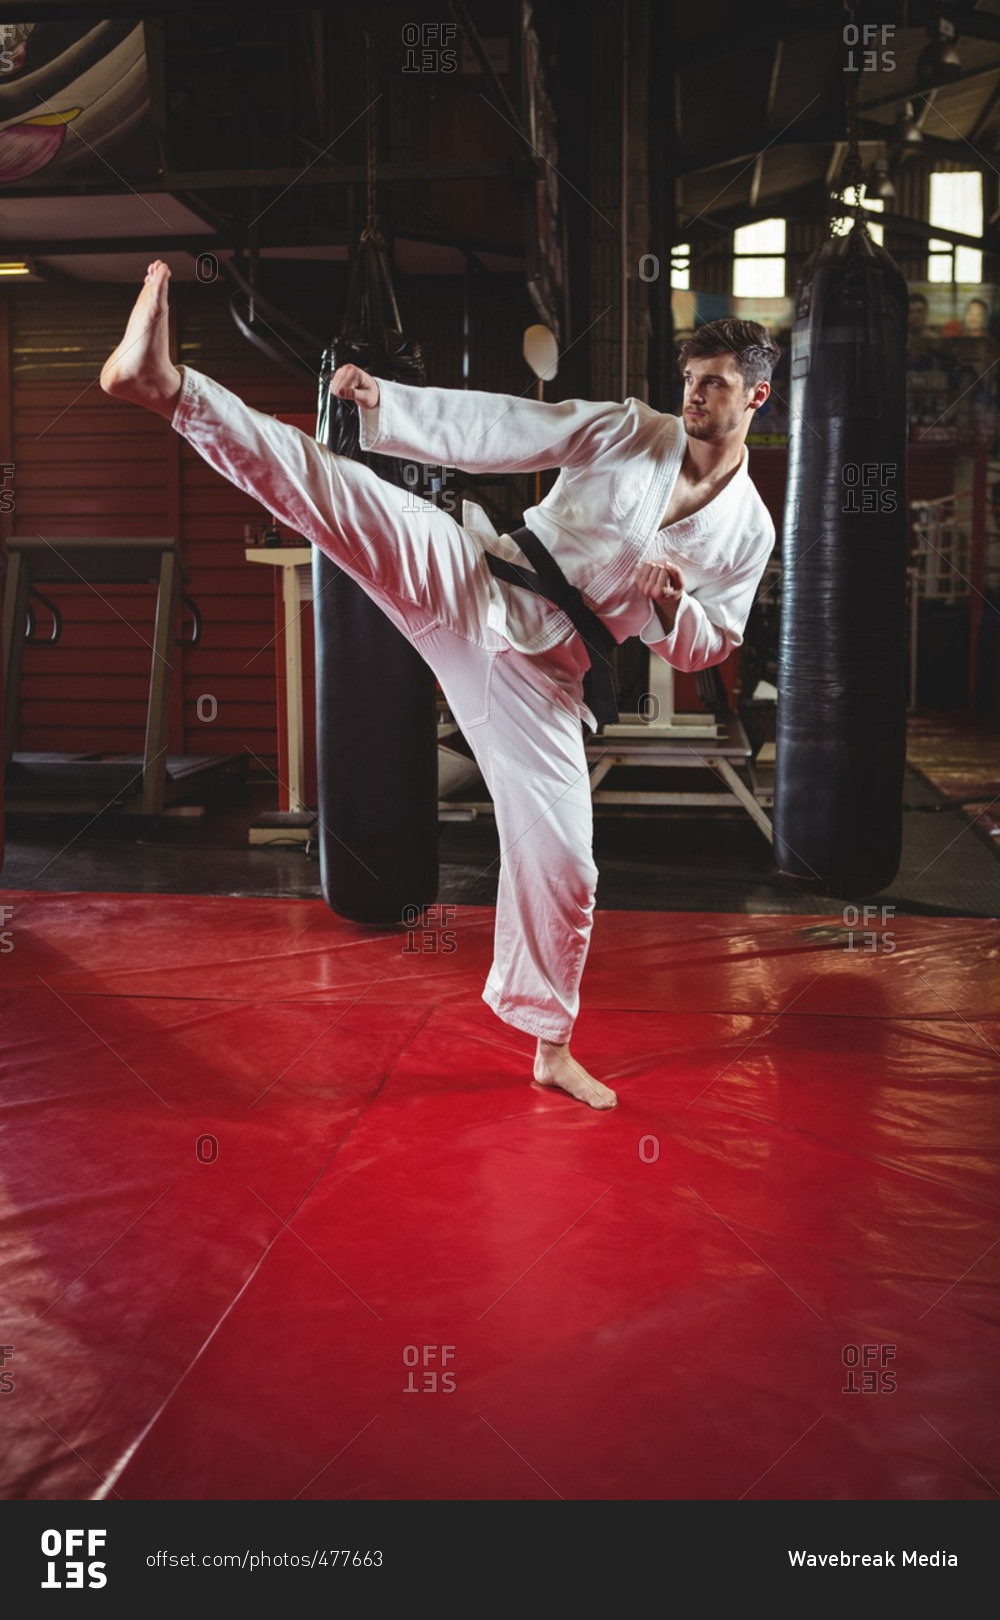 Karate practicing kickboxing in fitness studio